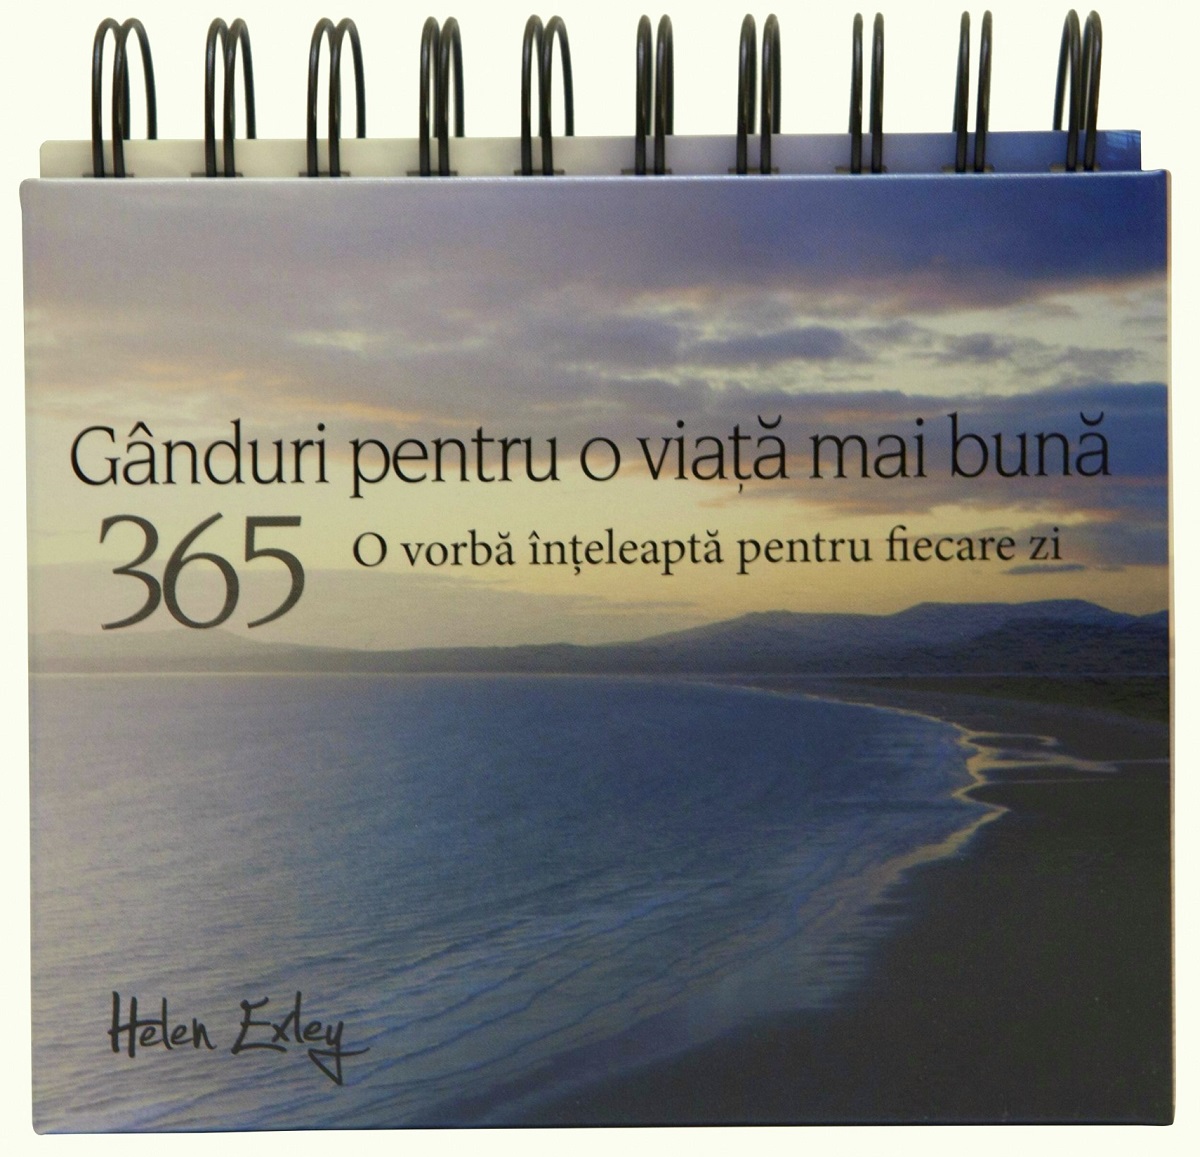 Calendar: 365 ganduri pentru o viata mai buna